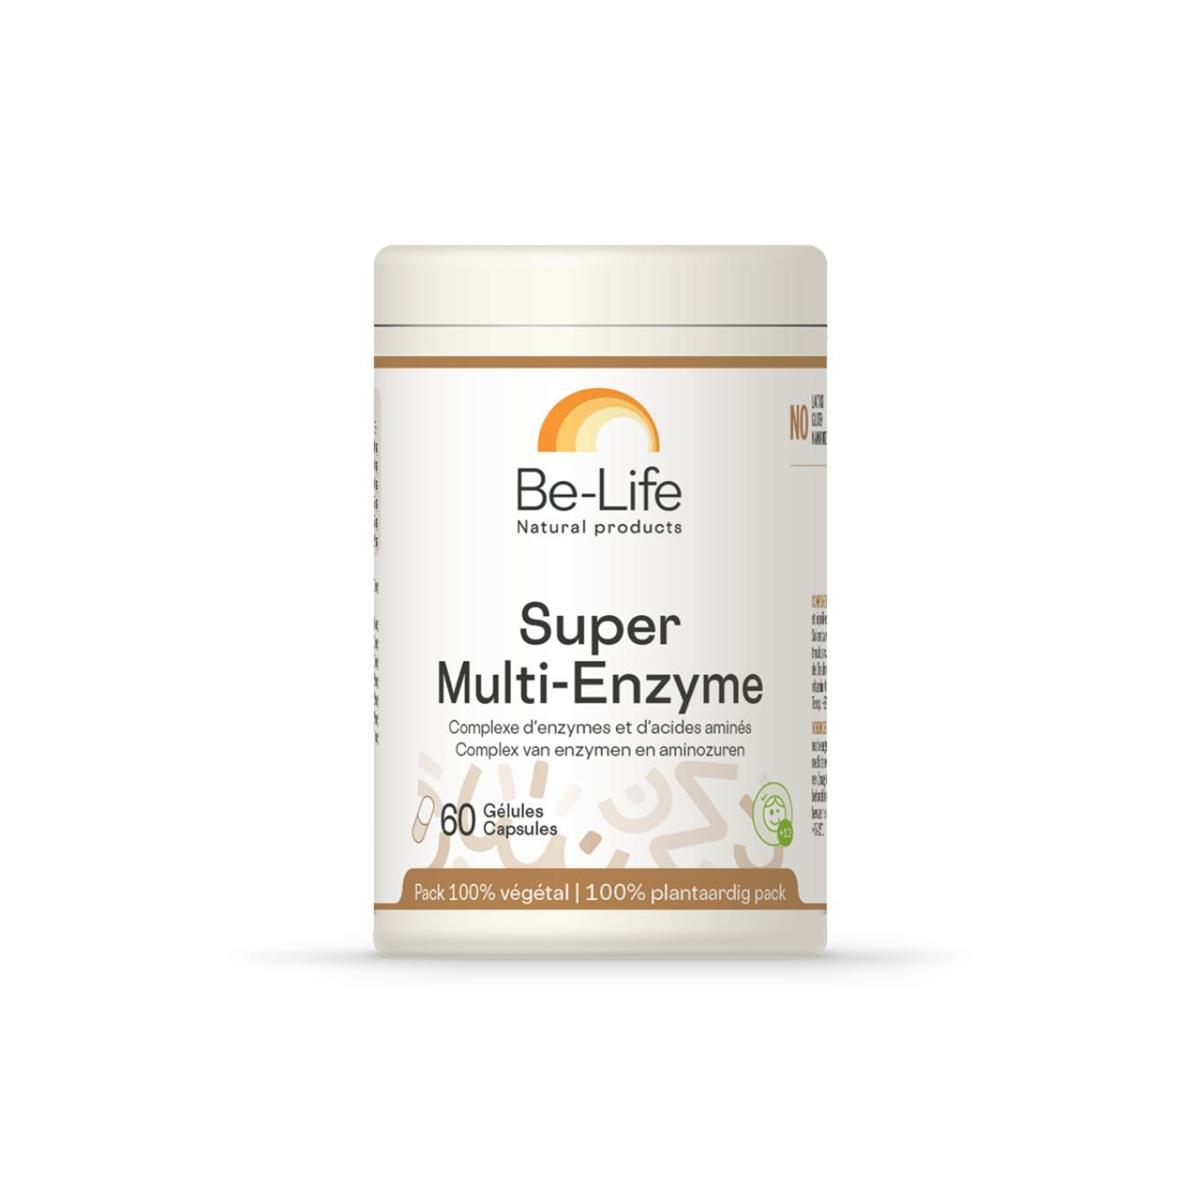 Super Multi-Enzyme